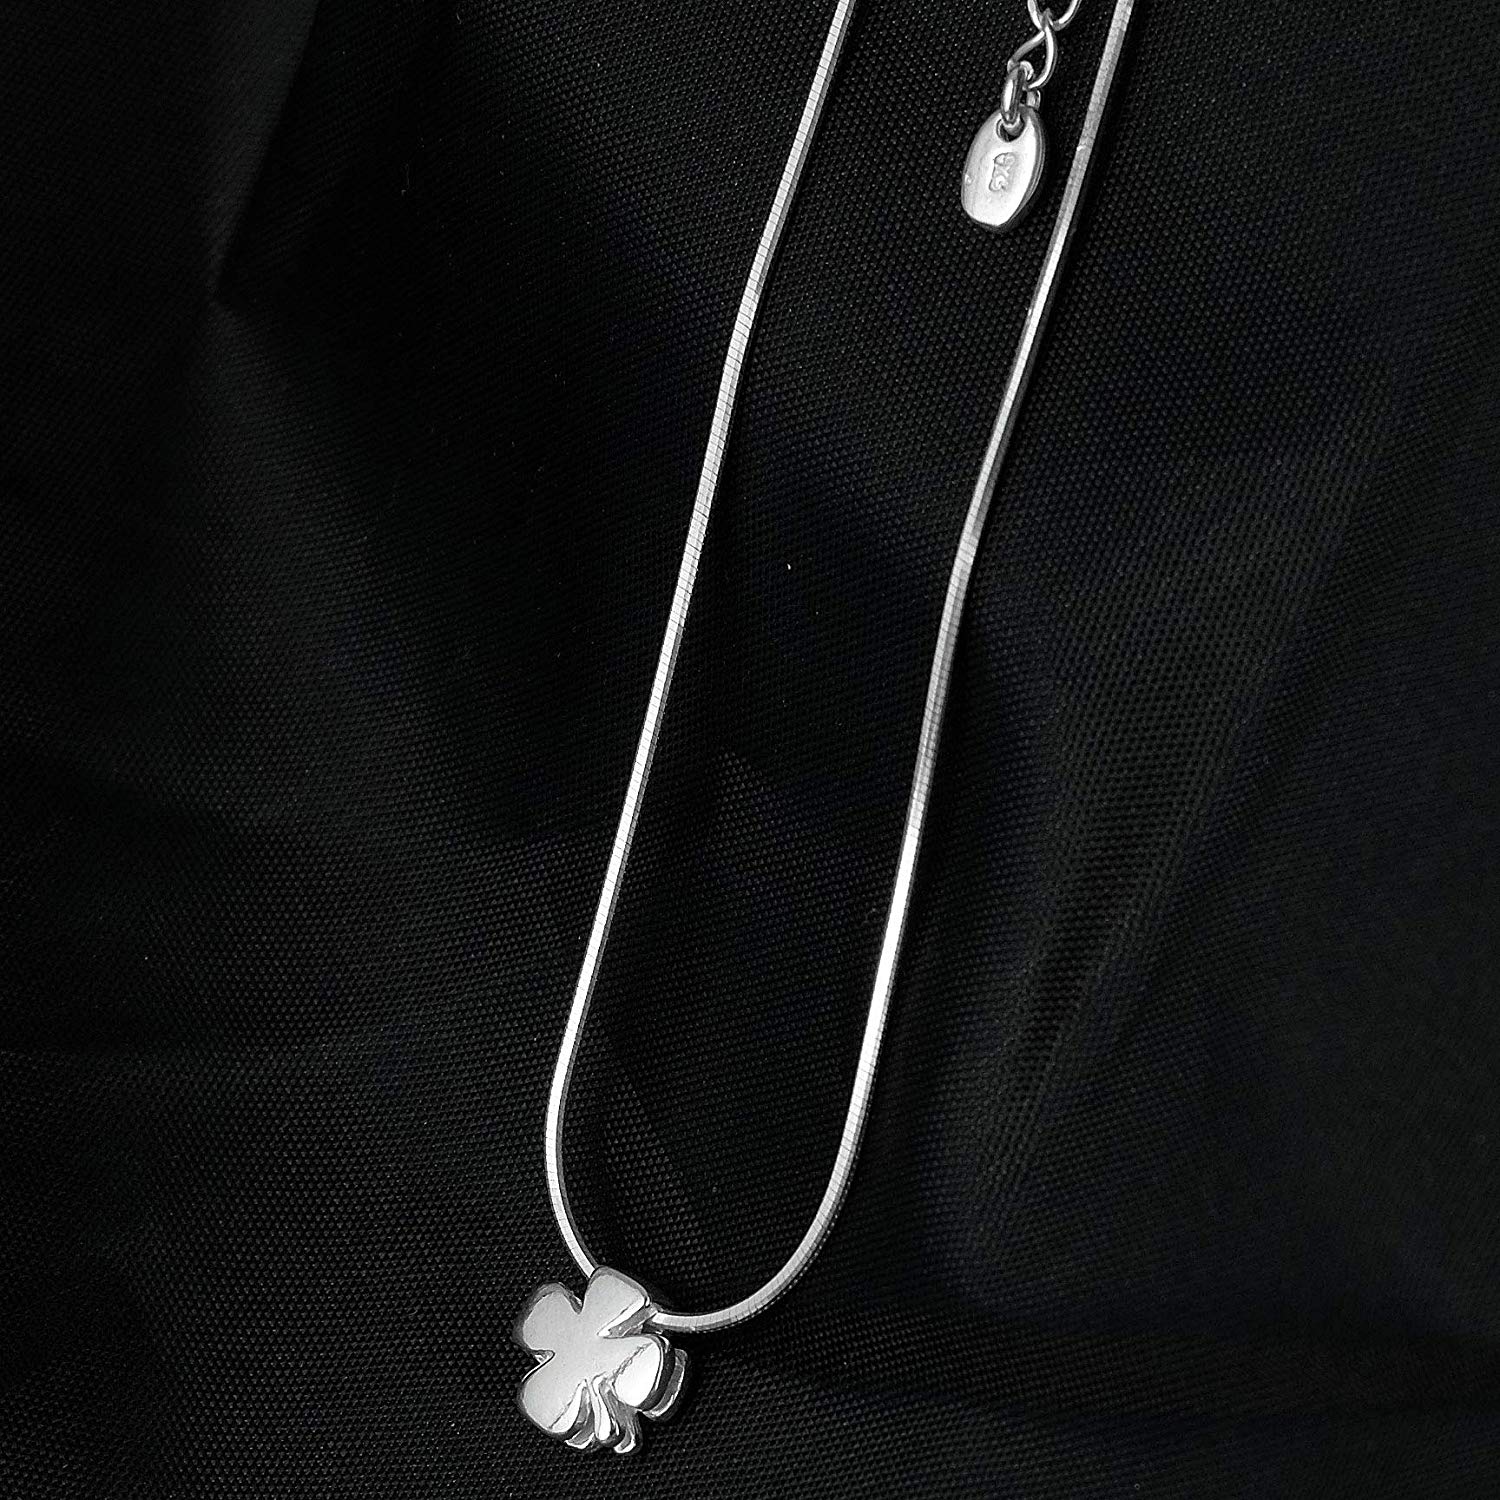 Glücksklee Blatt Kette - Kleeblatt Silber #2113 925 - Schmuck Damen Glücksbringer Silberkette